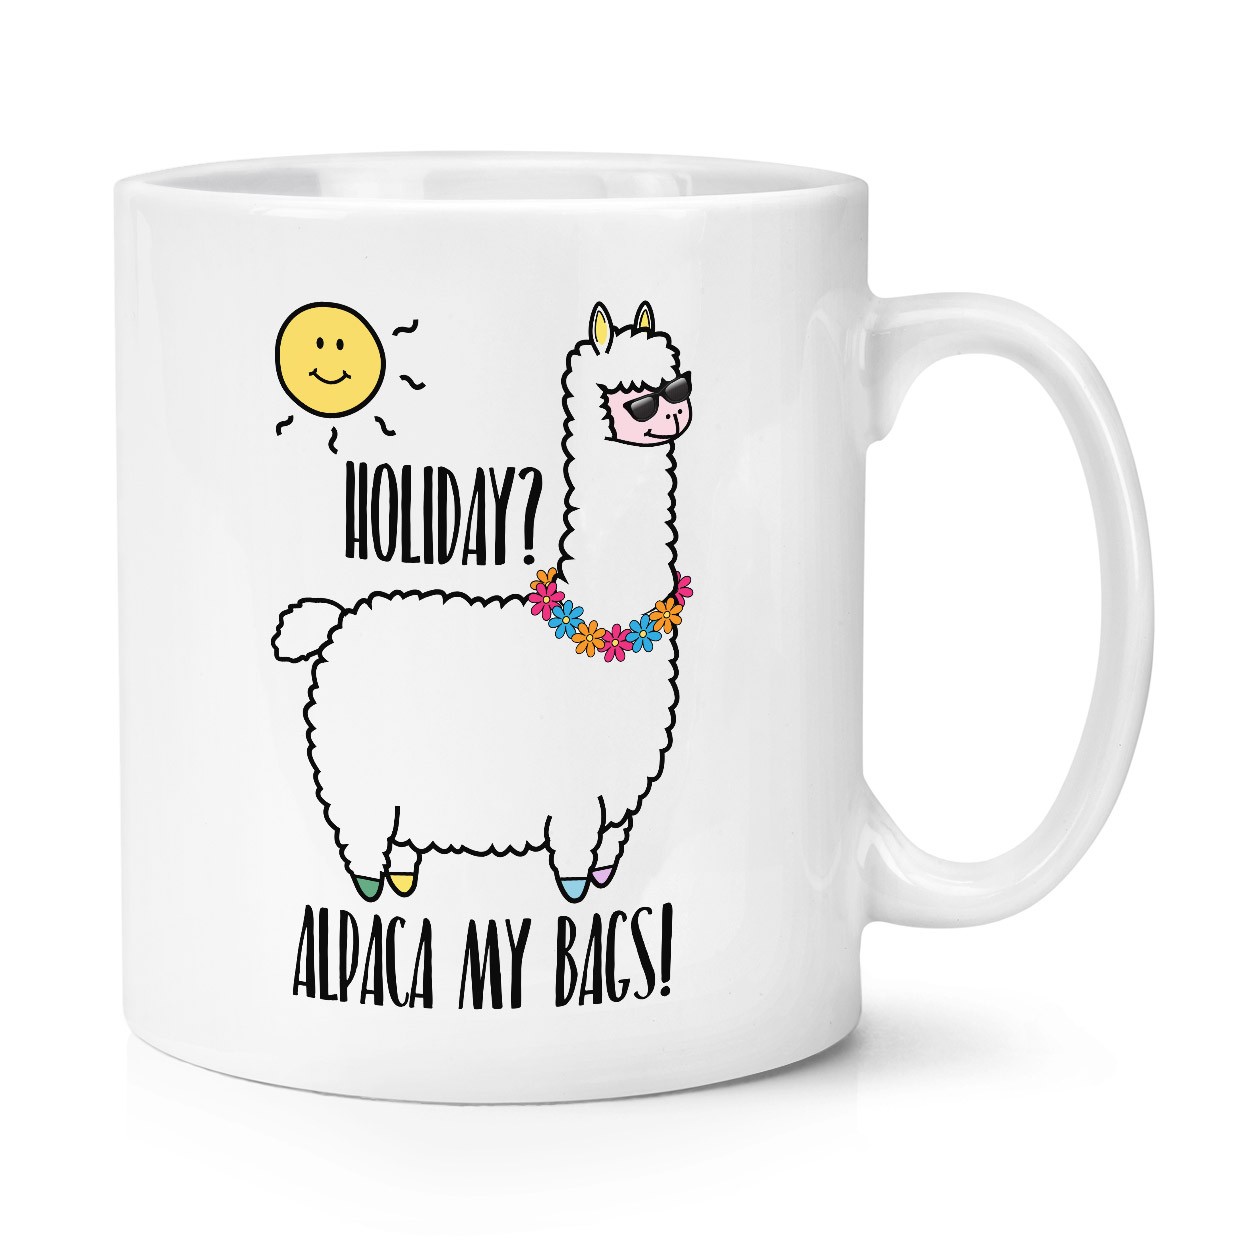 Holiday Alpaca My Bags 10oz Mug Cup